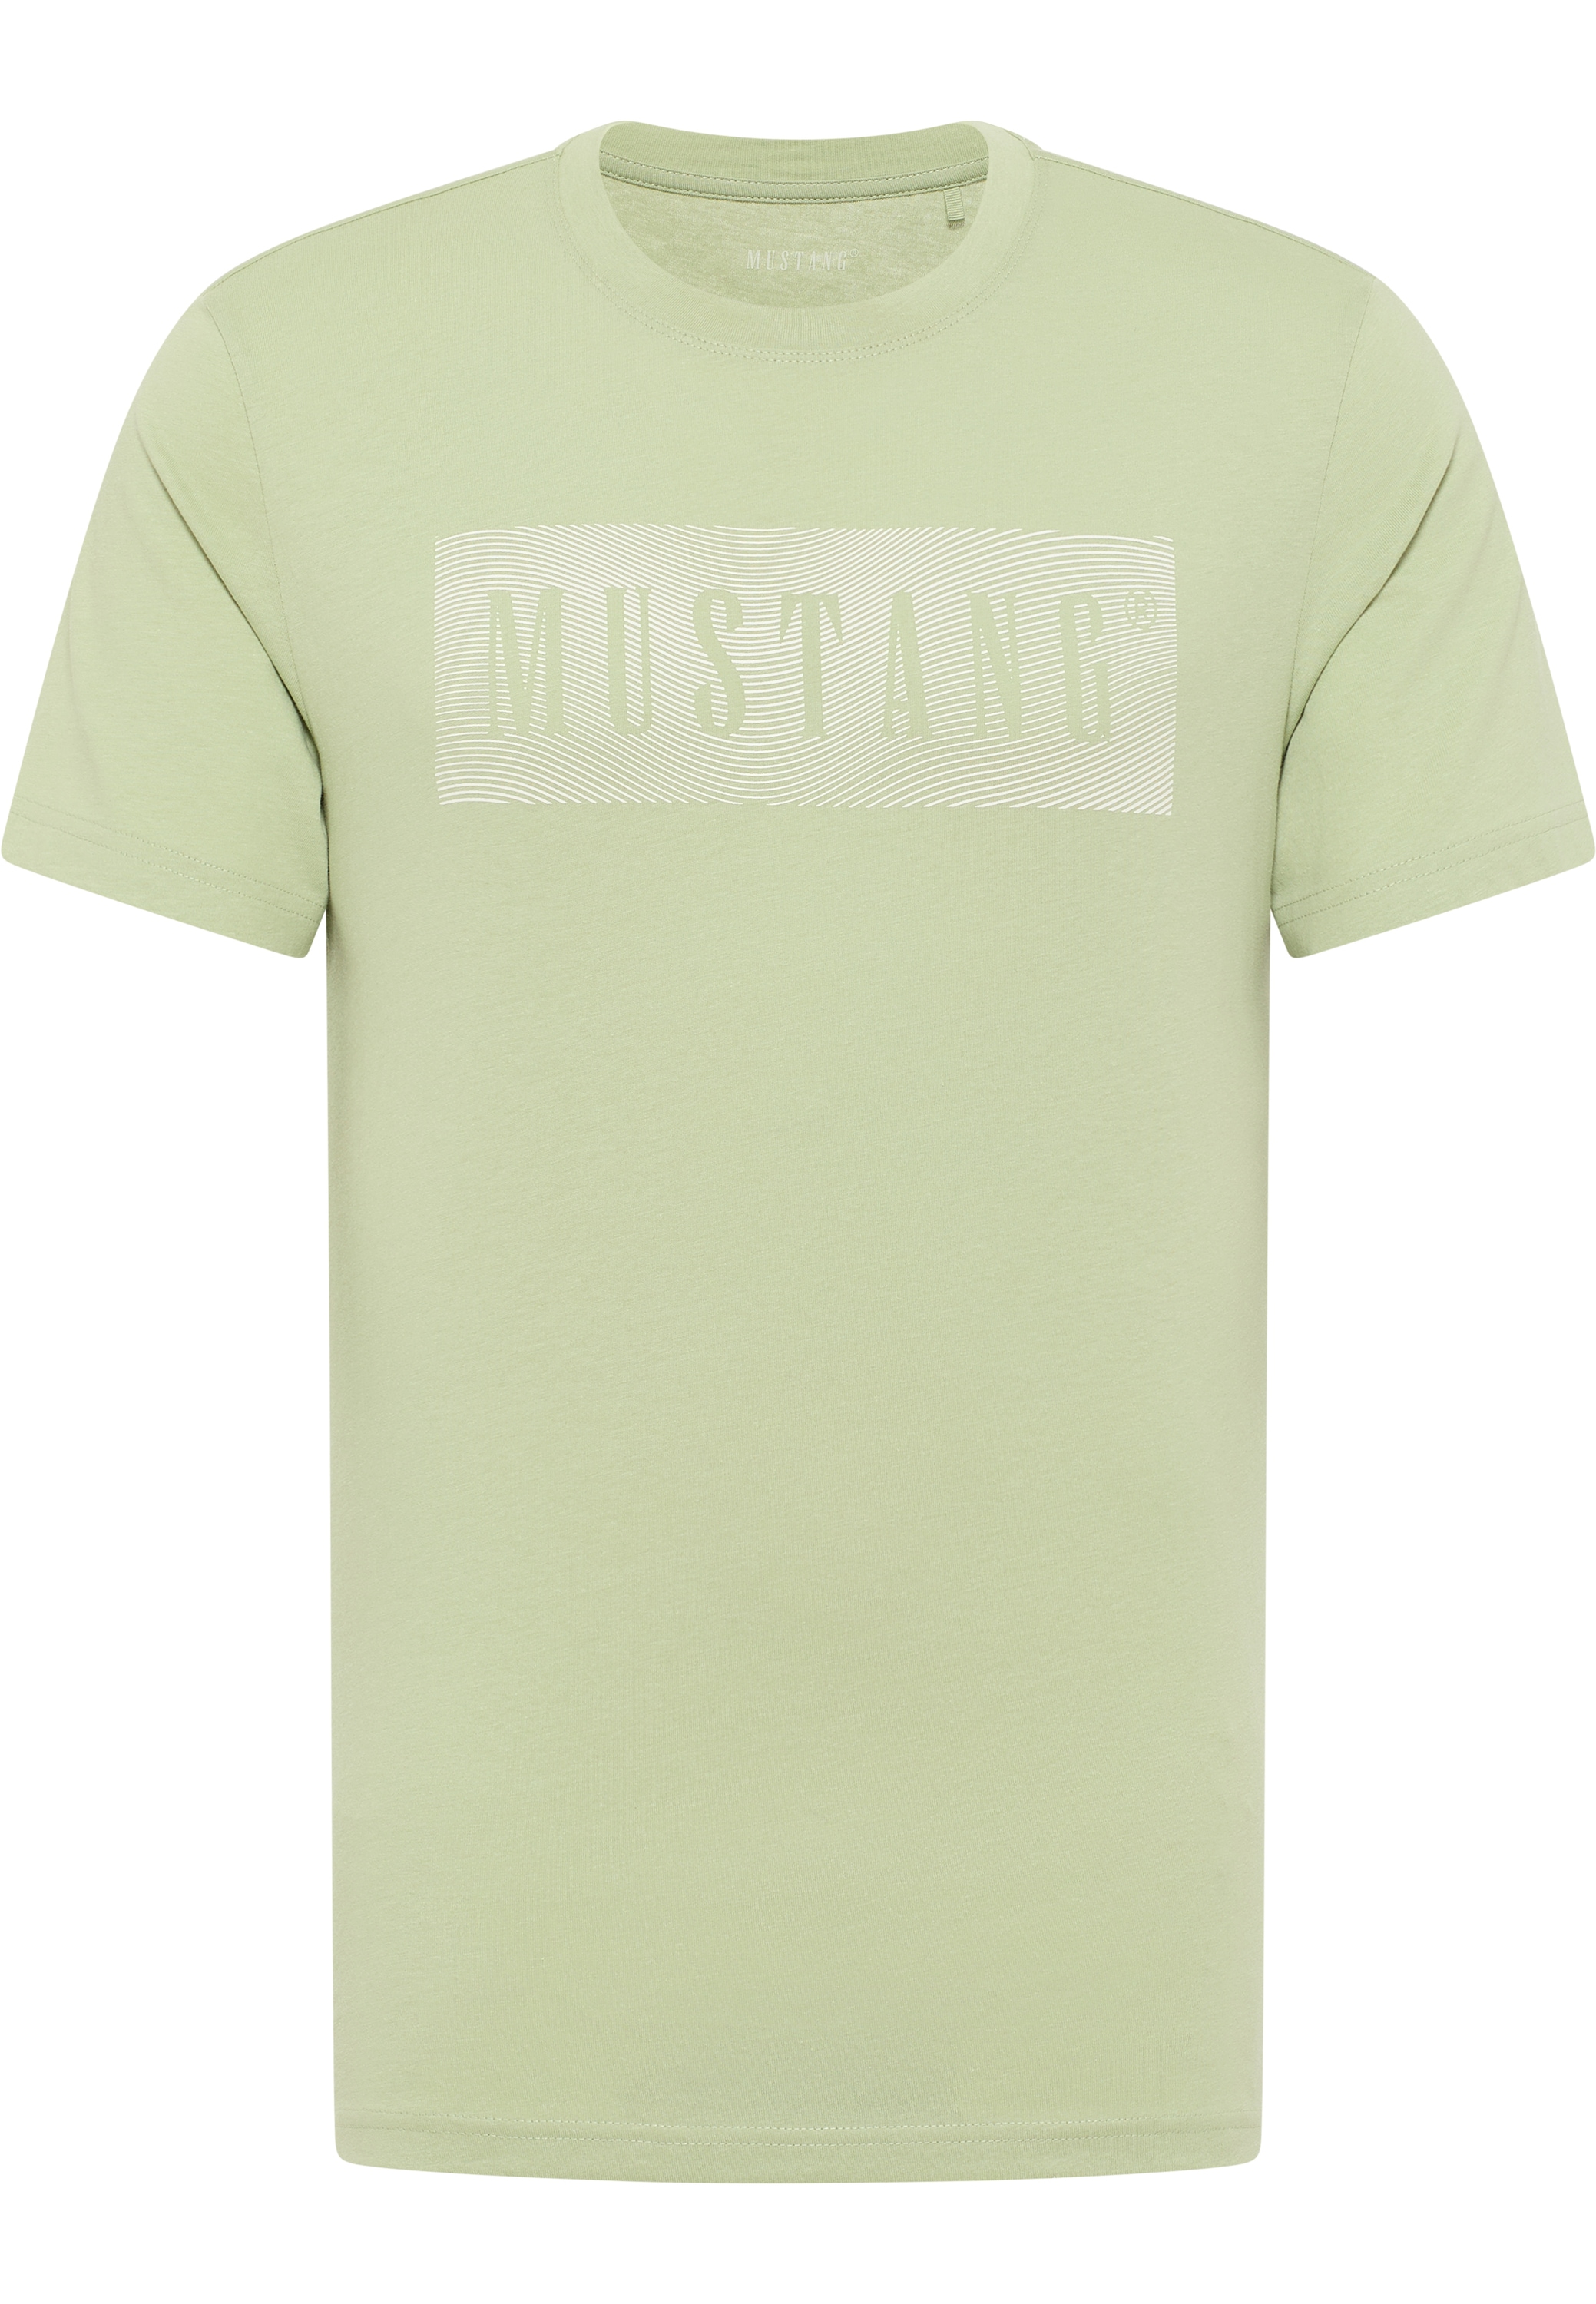 Mustang Kurzarmshirt »T-Shirt«